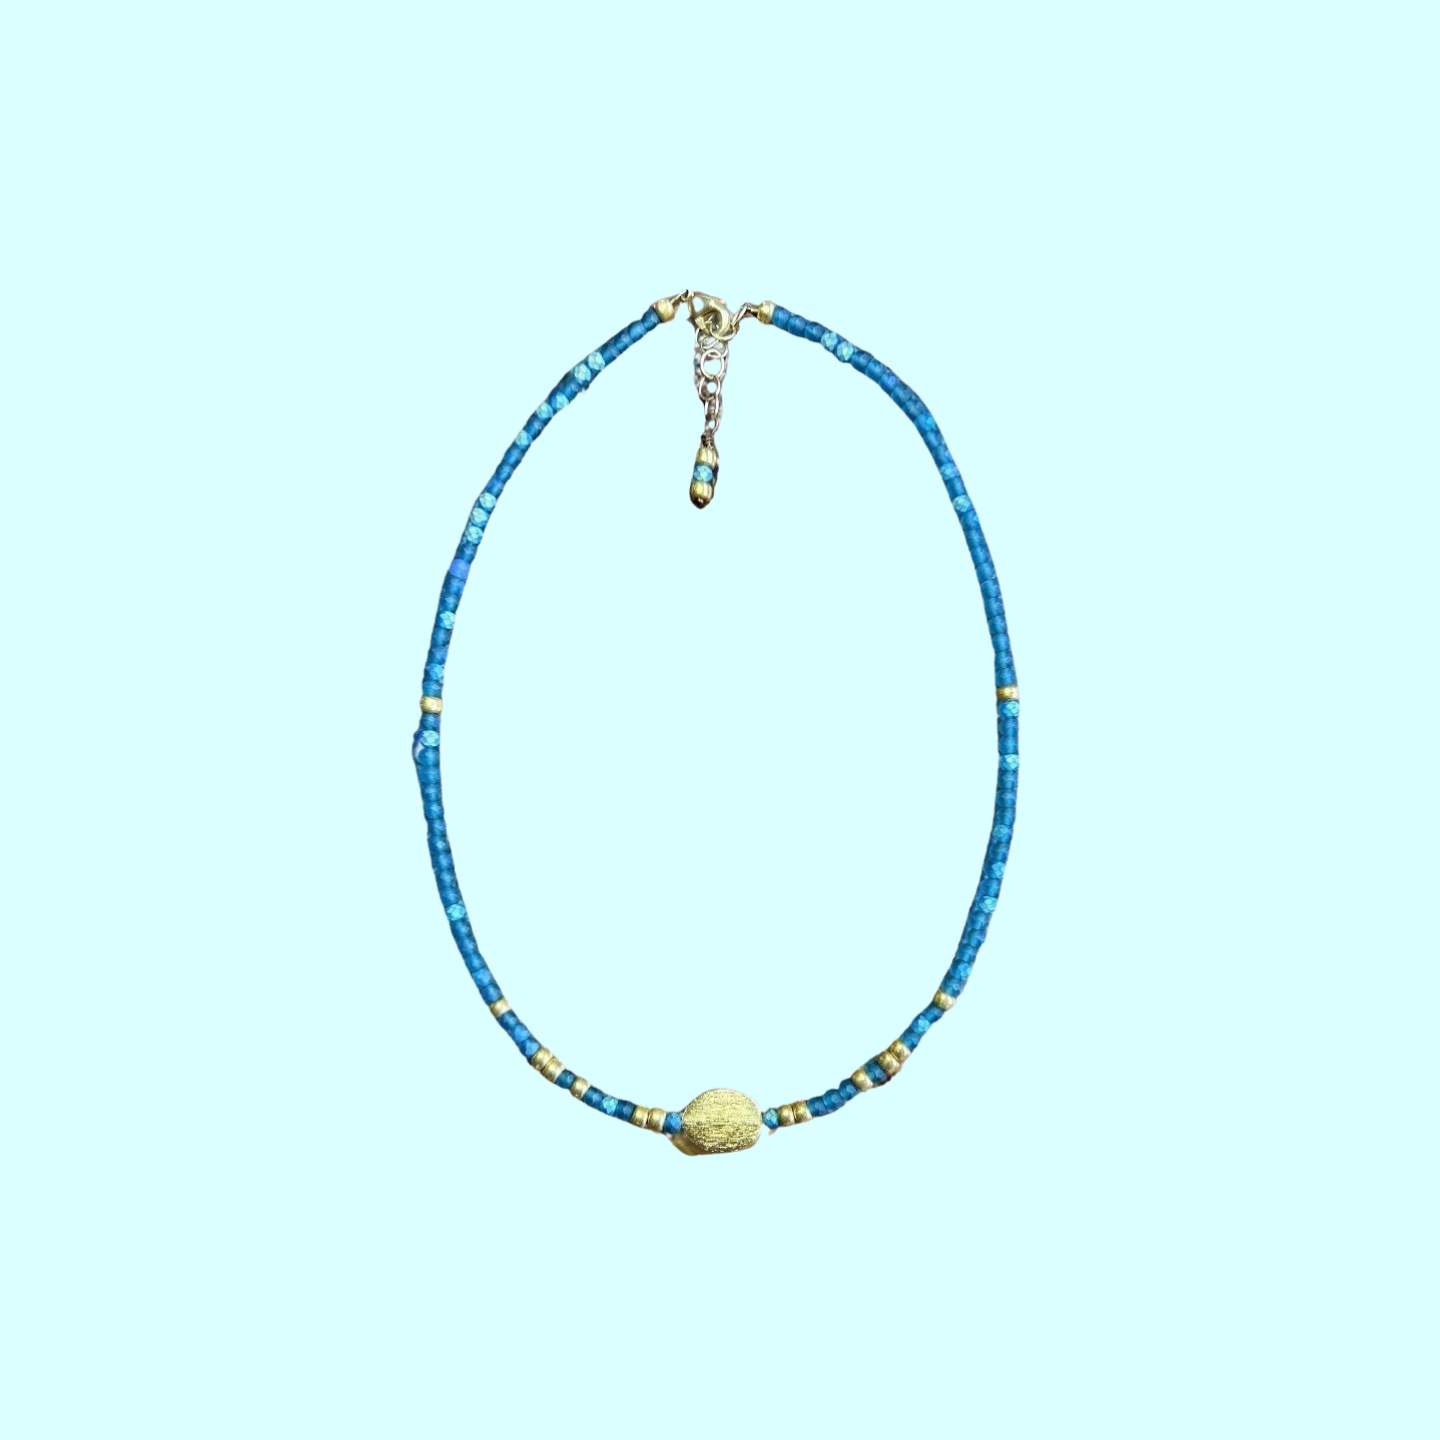 The Mykonos Necklace